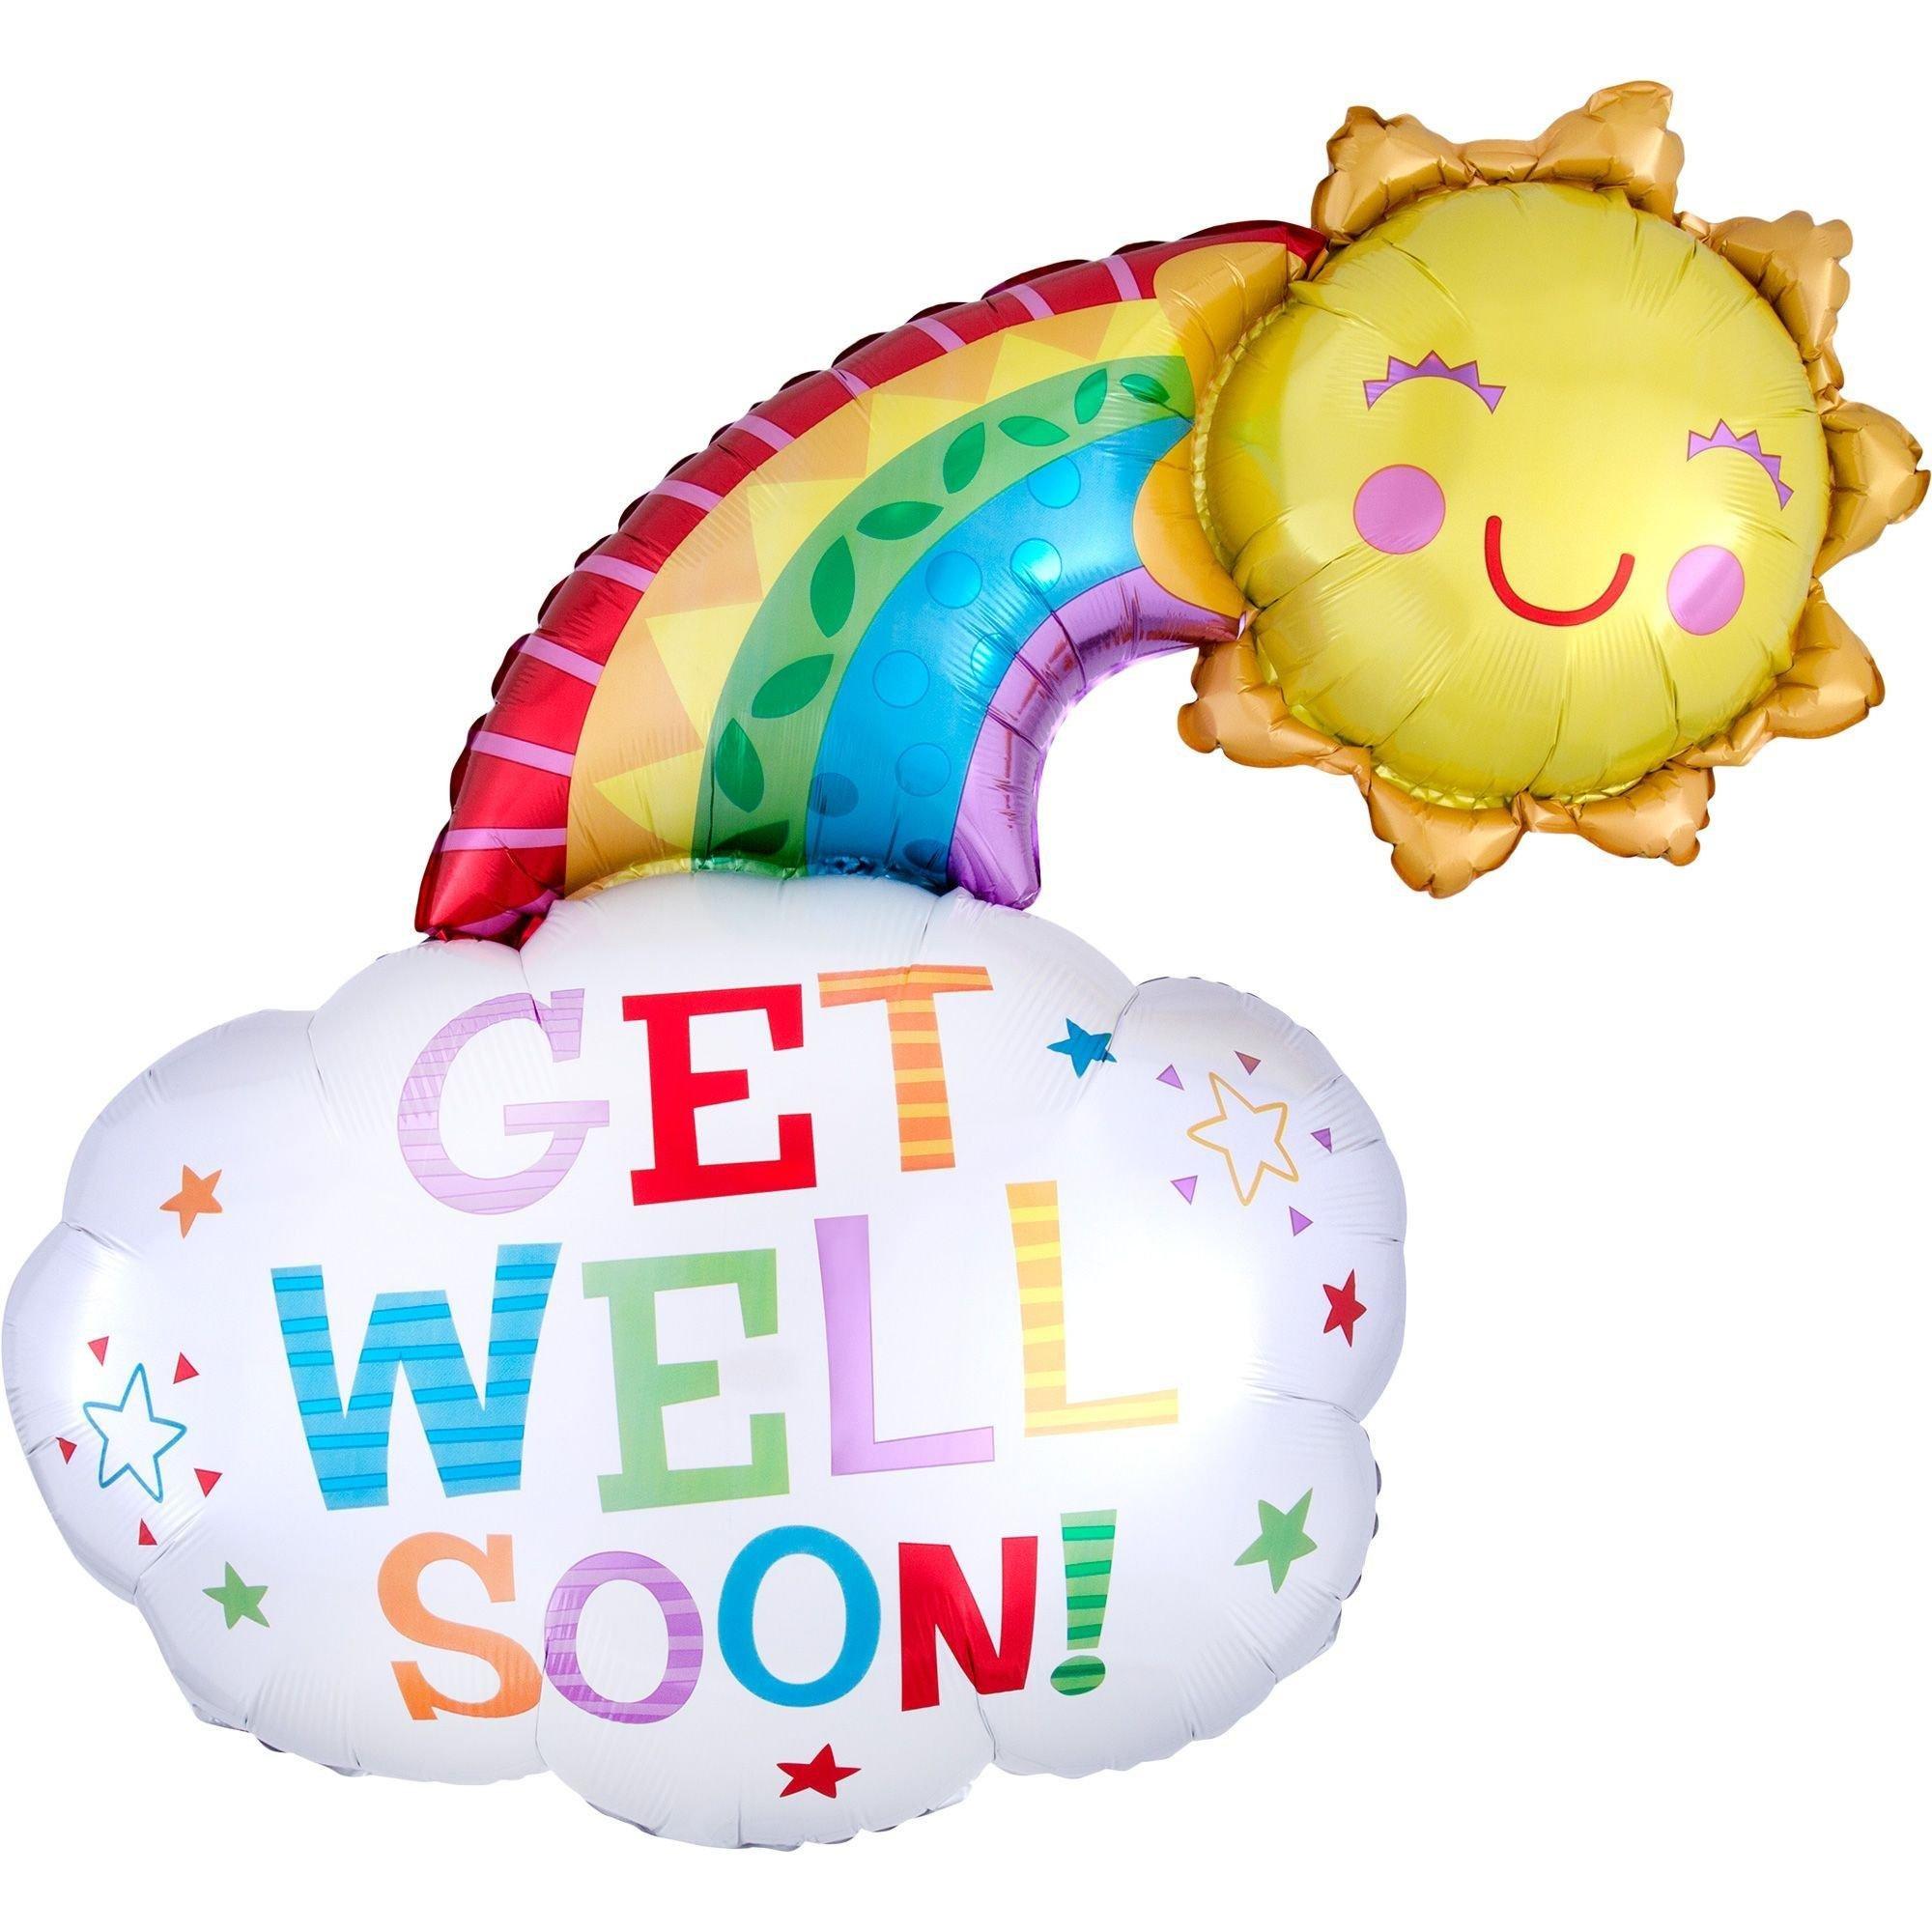 Premium Rainbow & Sunshine Get Well Soon Foil Balloon Bouquet with Balloon Weight, 13pc